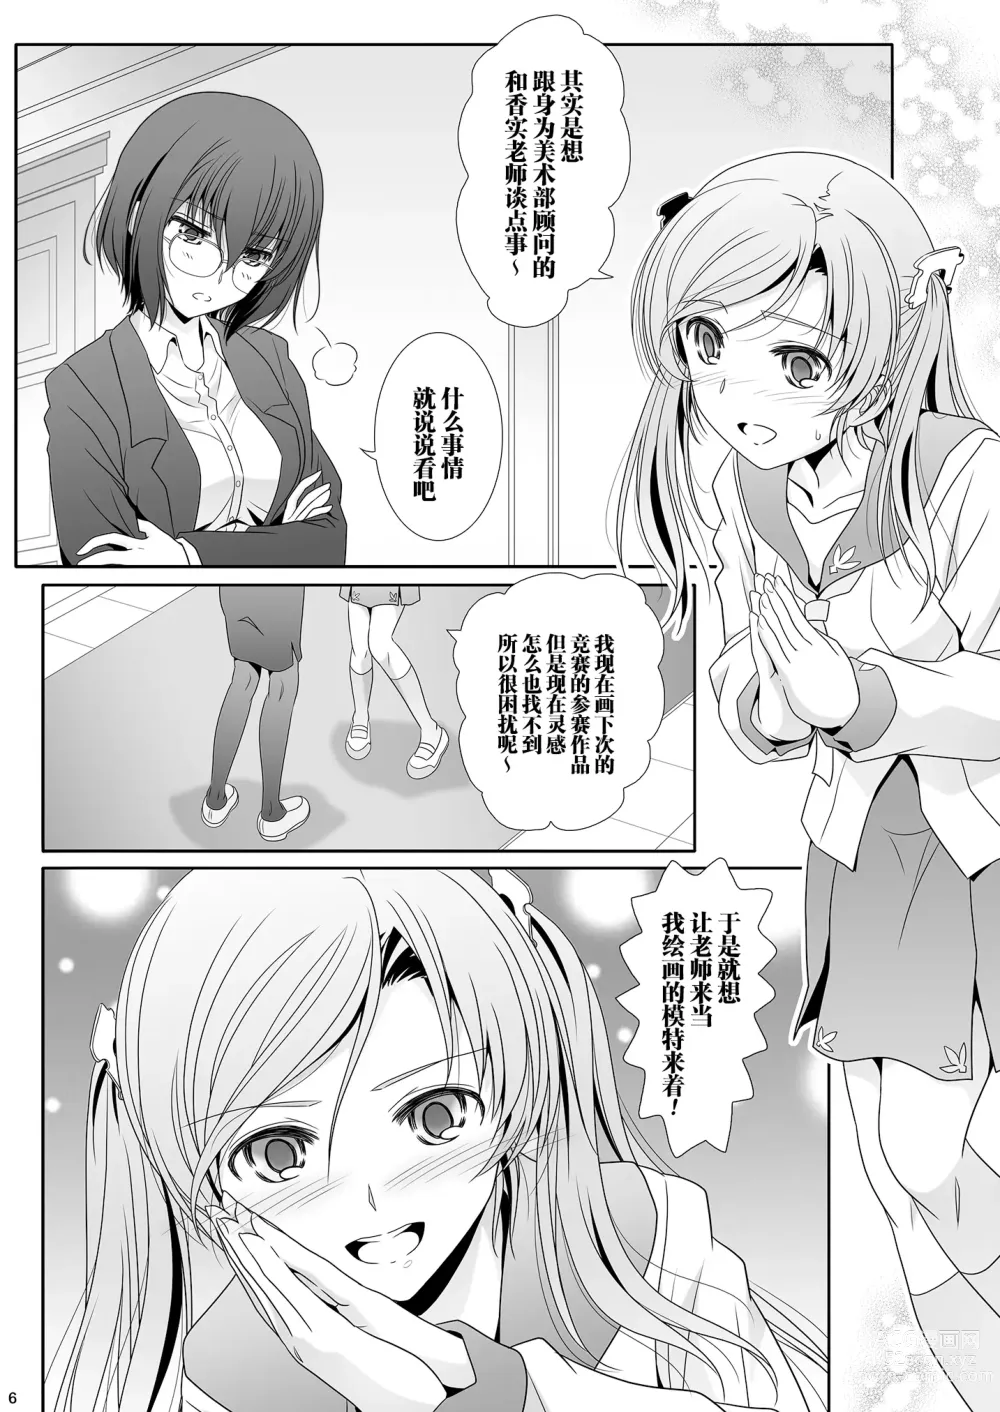 Page 6 of doujinshi 少女描绘 和香实老师和蕾欧娜的S速写